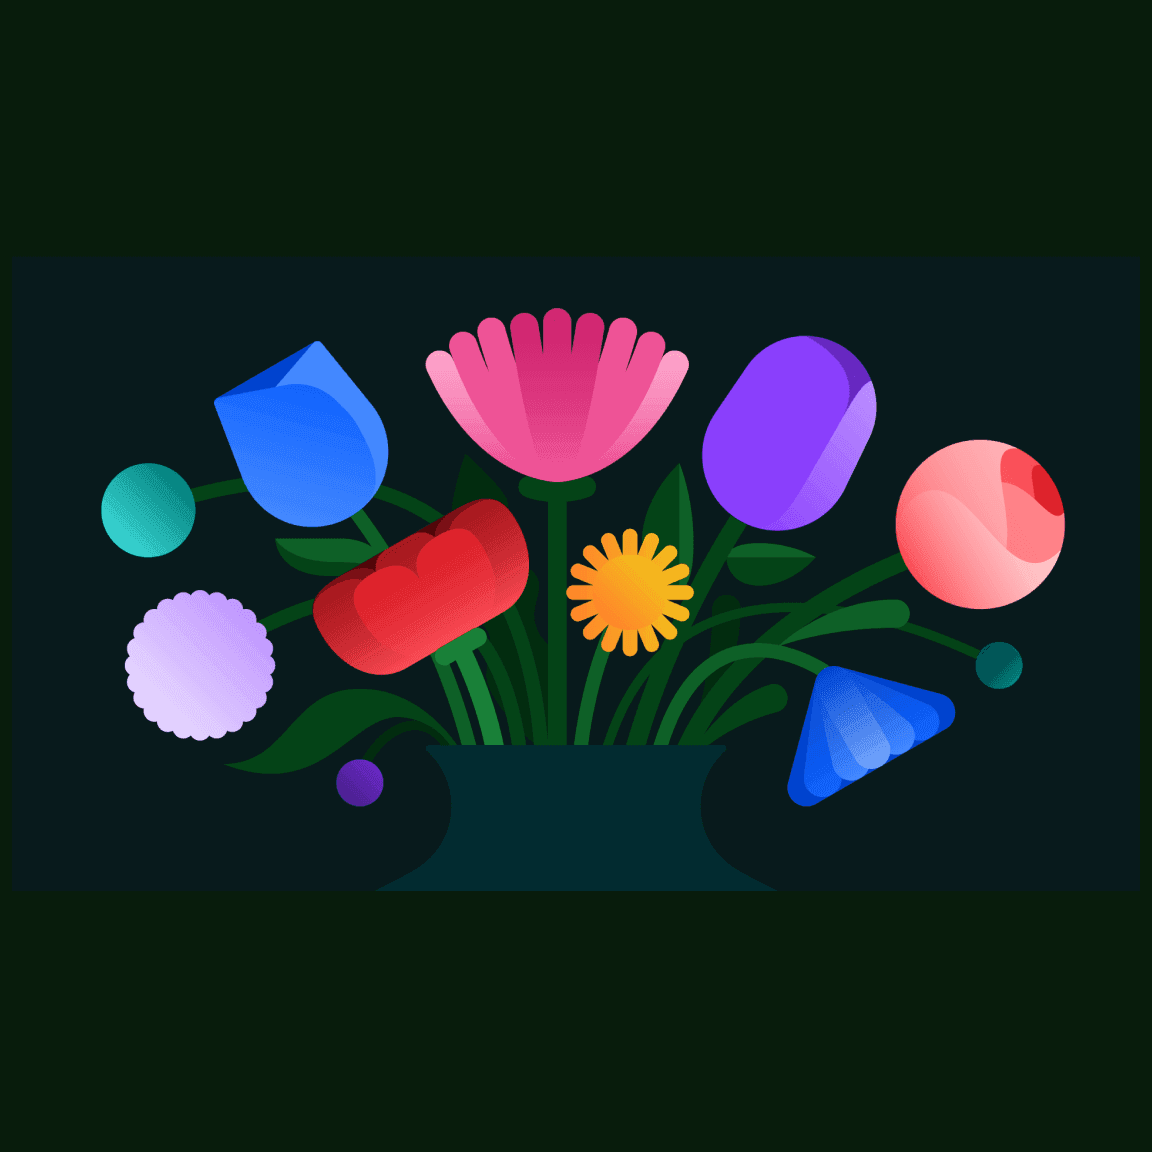 flat-style illustration of flowers